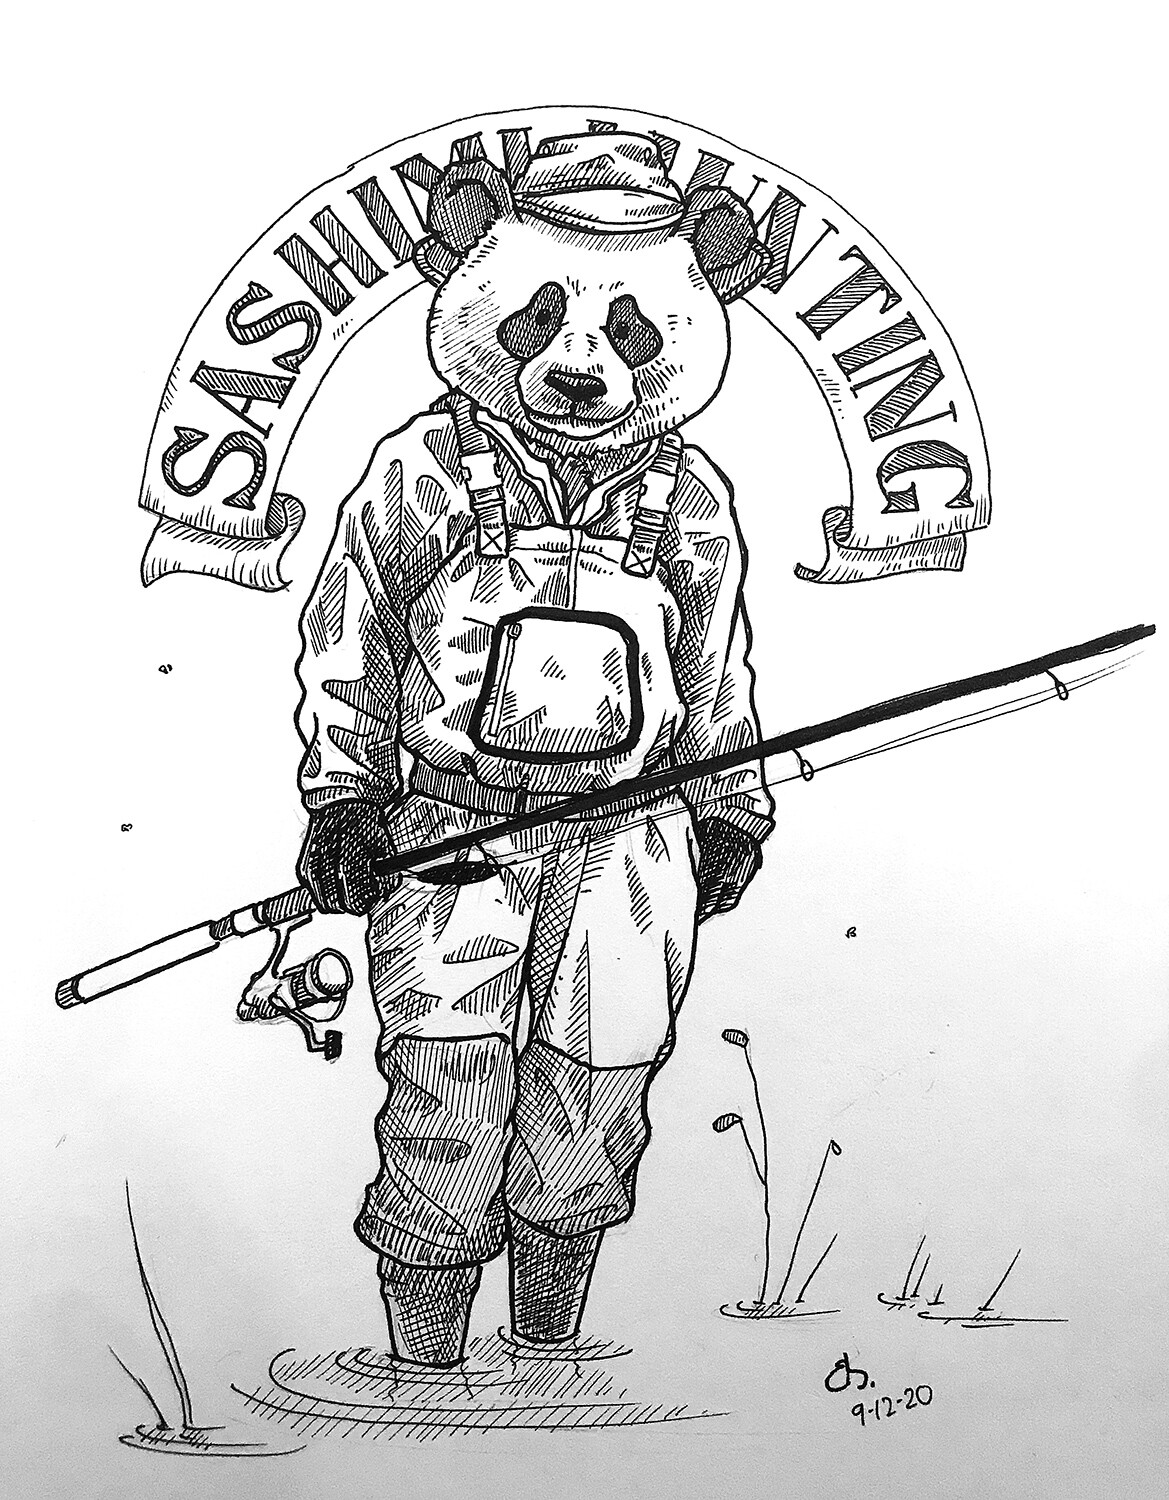 Panda character